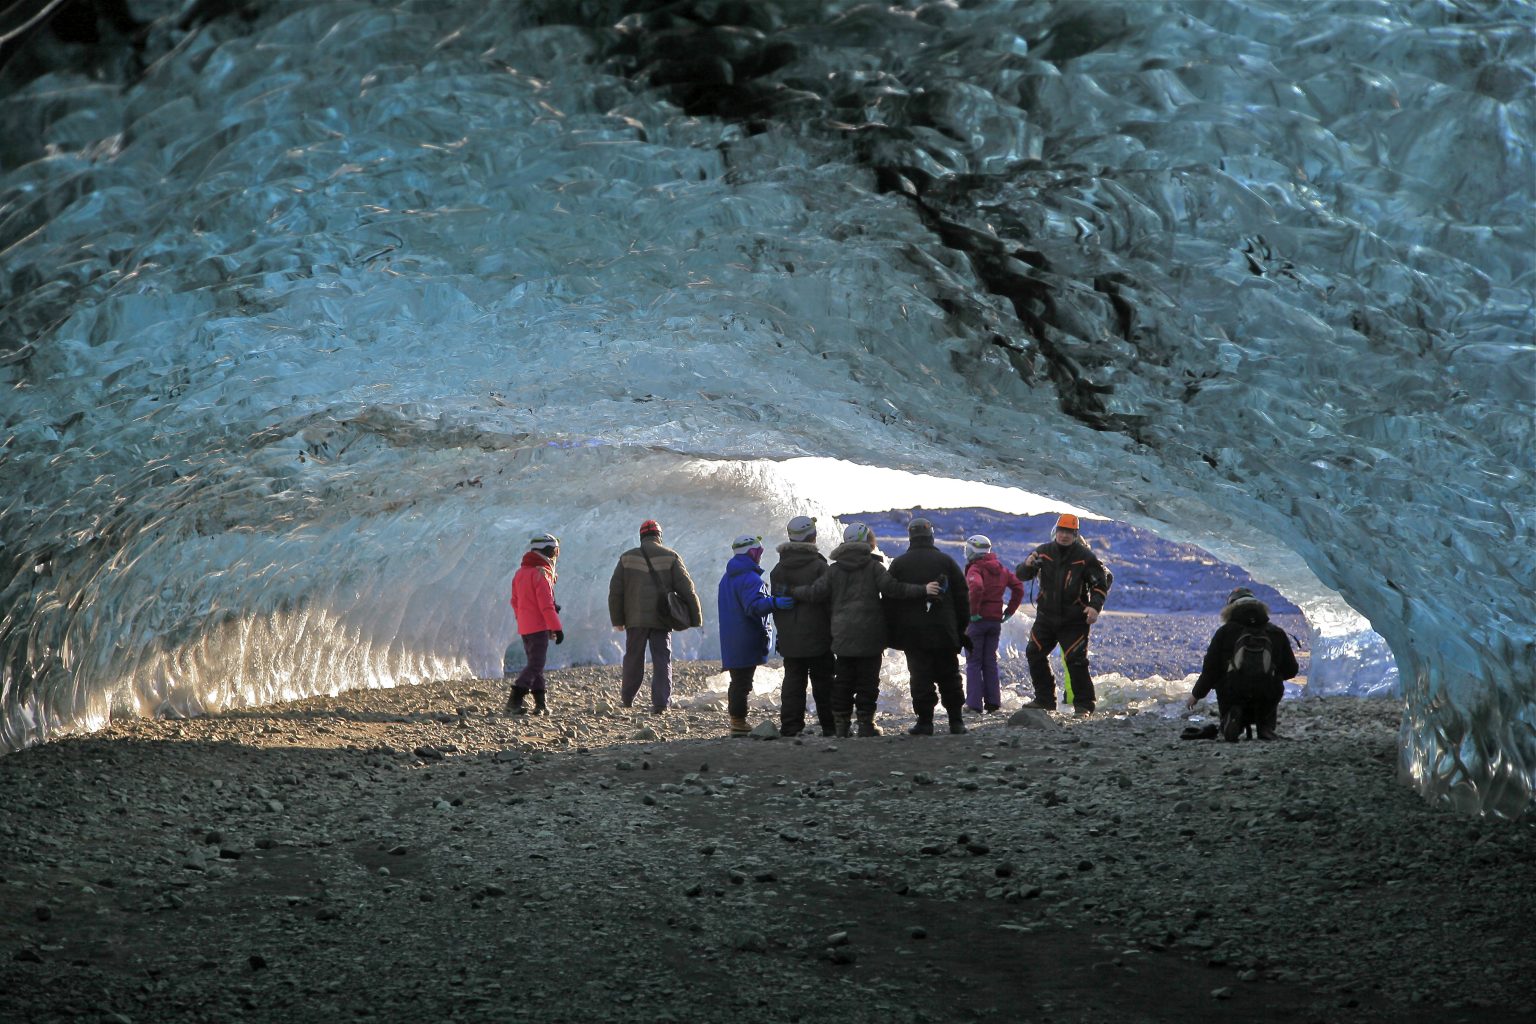 Group in ice cave - Blue Iceland glacier tour, Vatnajökull, Iceland.